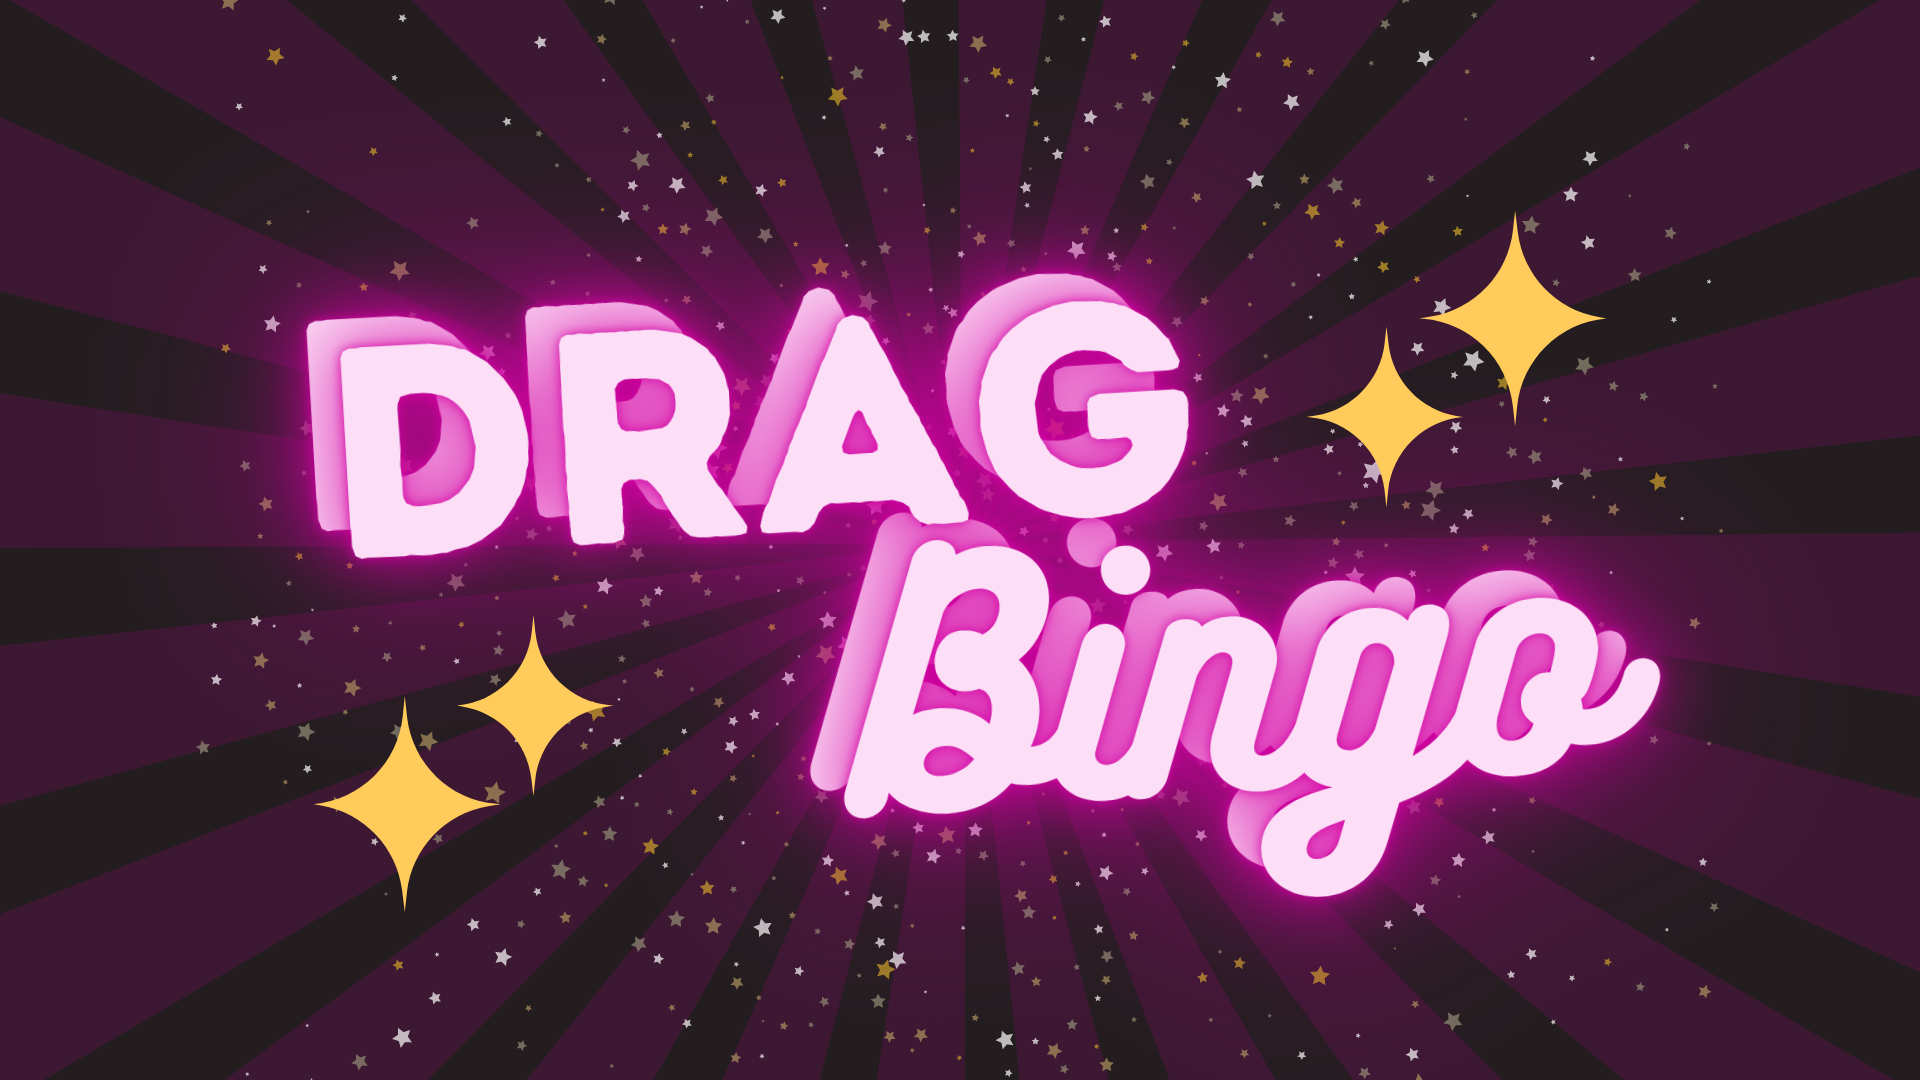 Drag Bingo in neon typeface with glitter burst background